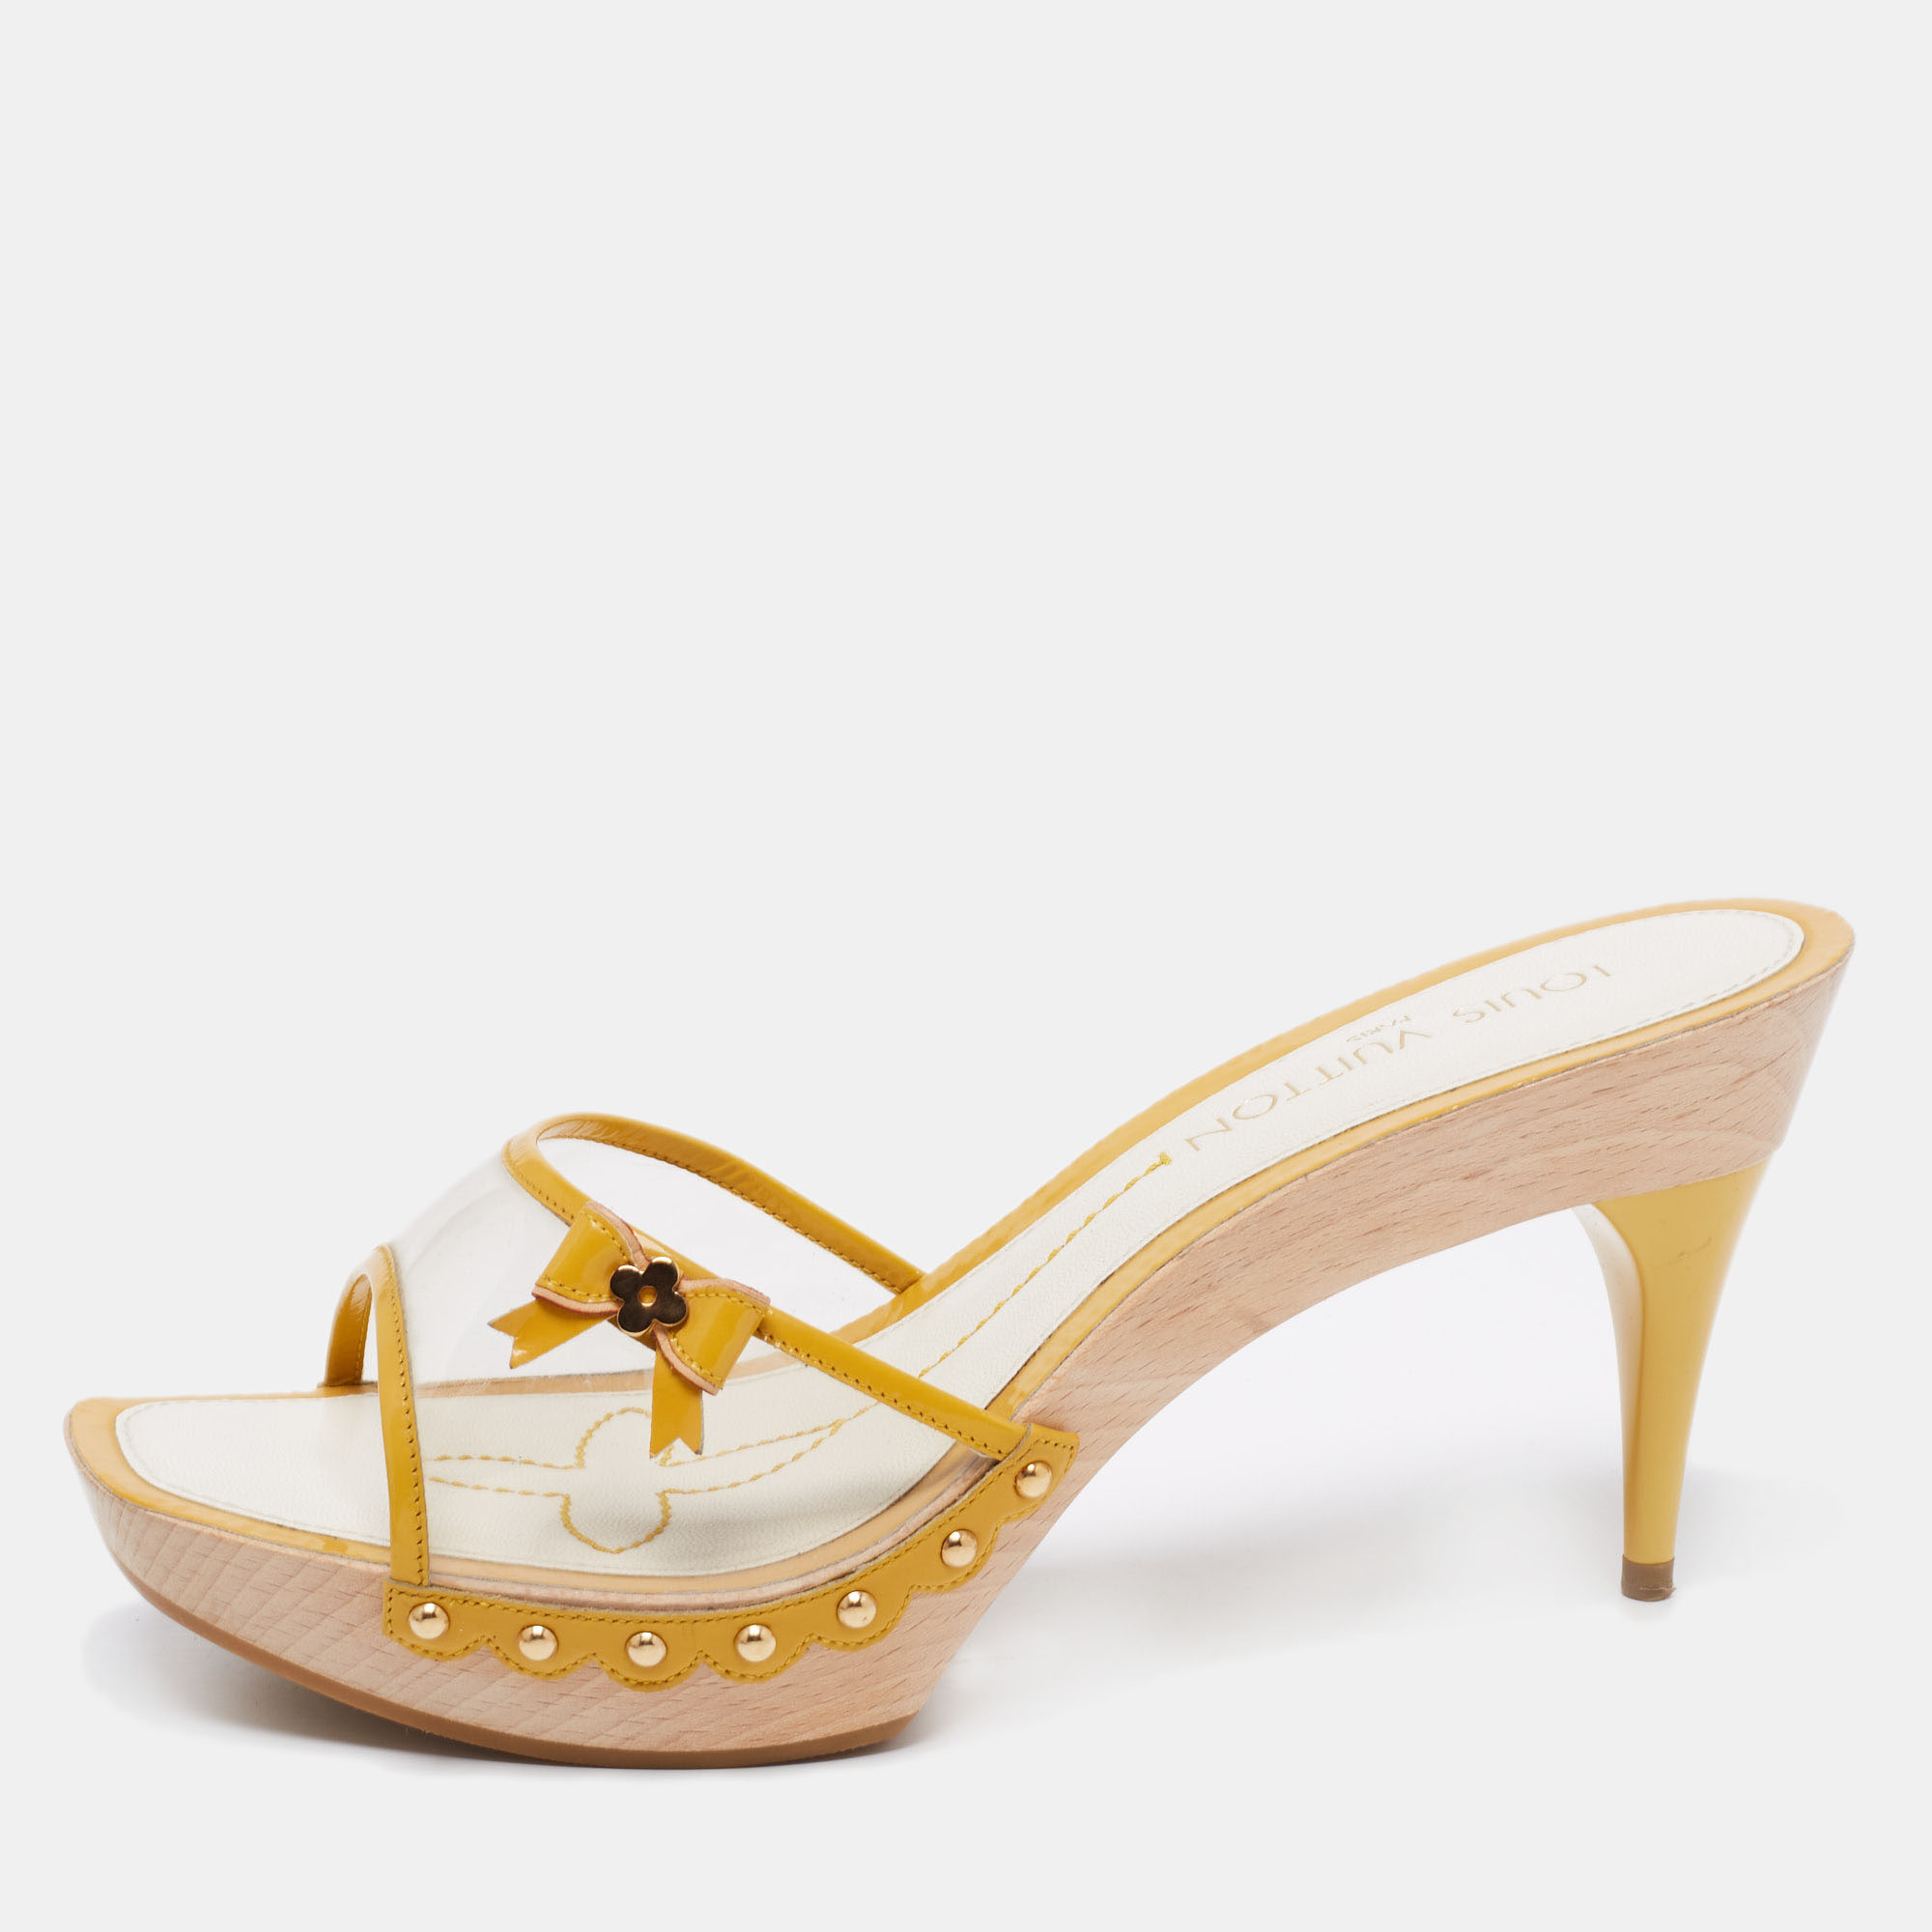 Louis vuitton yellow patent leather and pvc bow platform slide sandals size 40.5